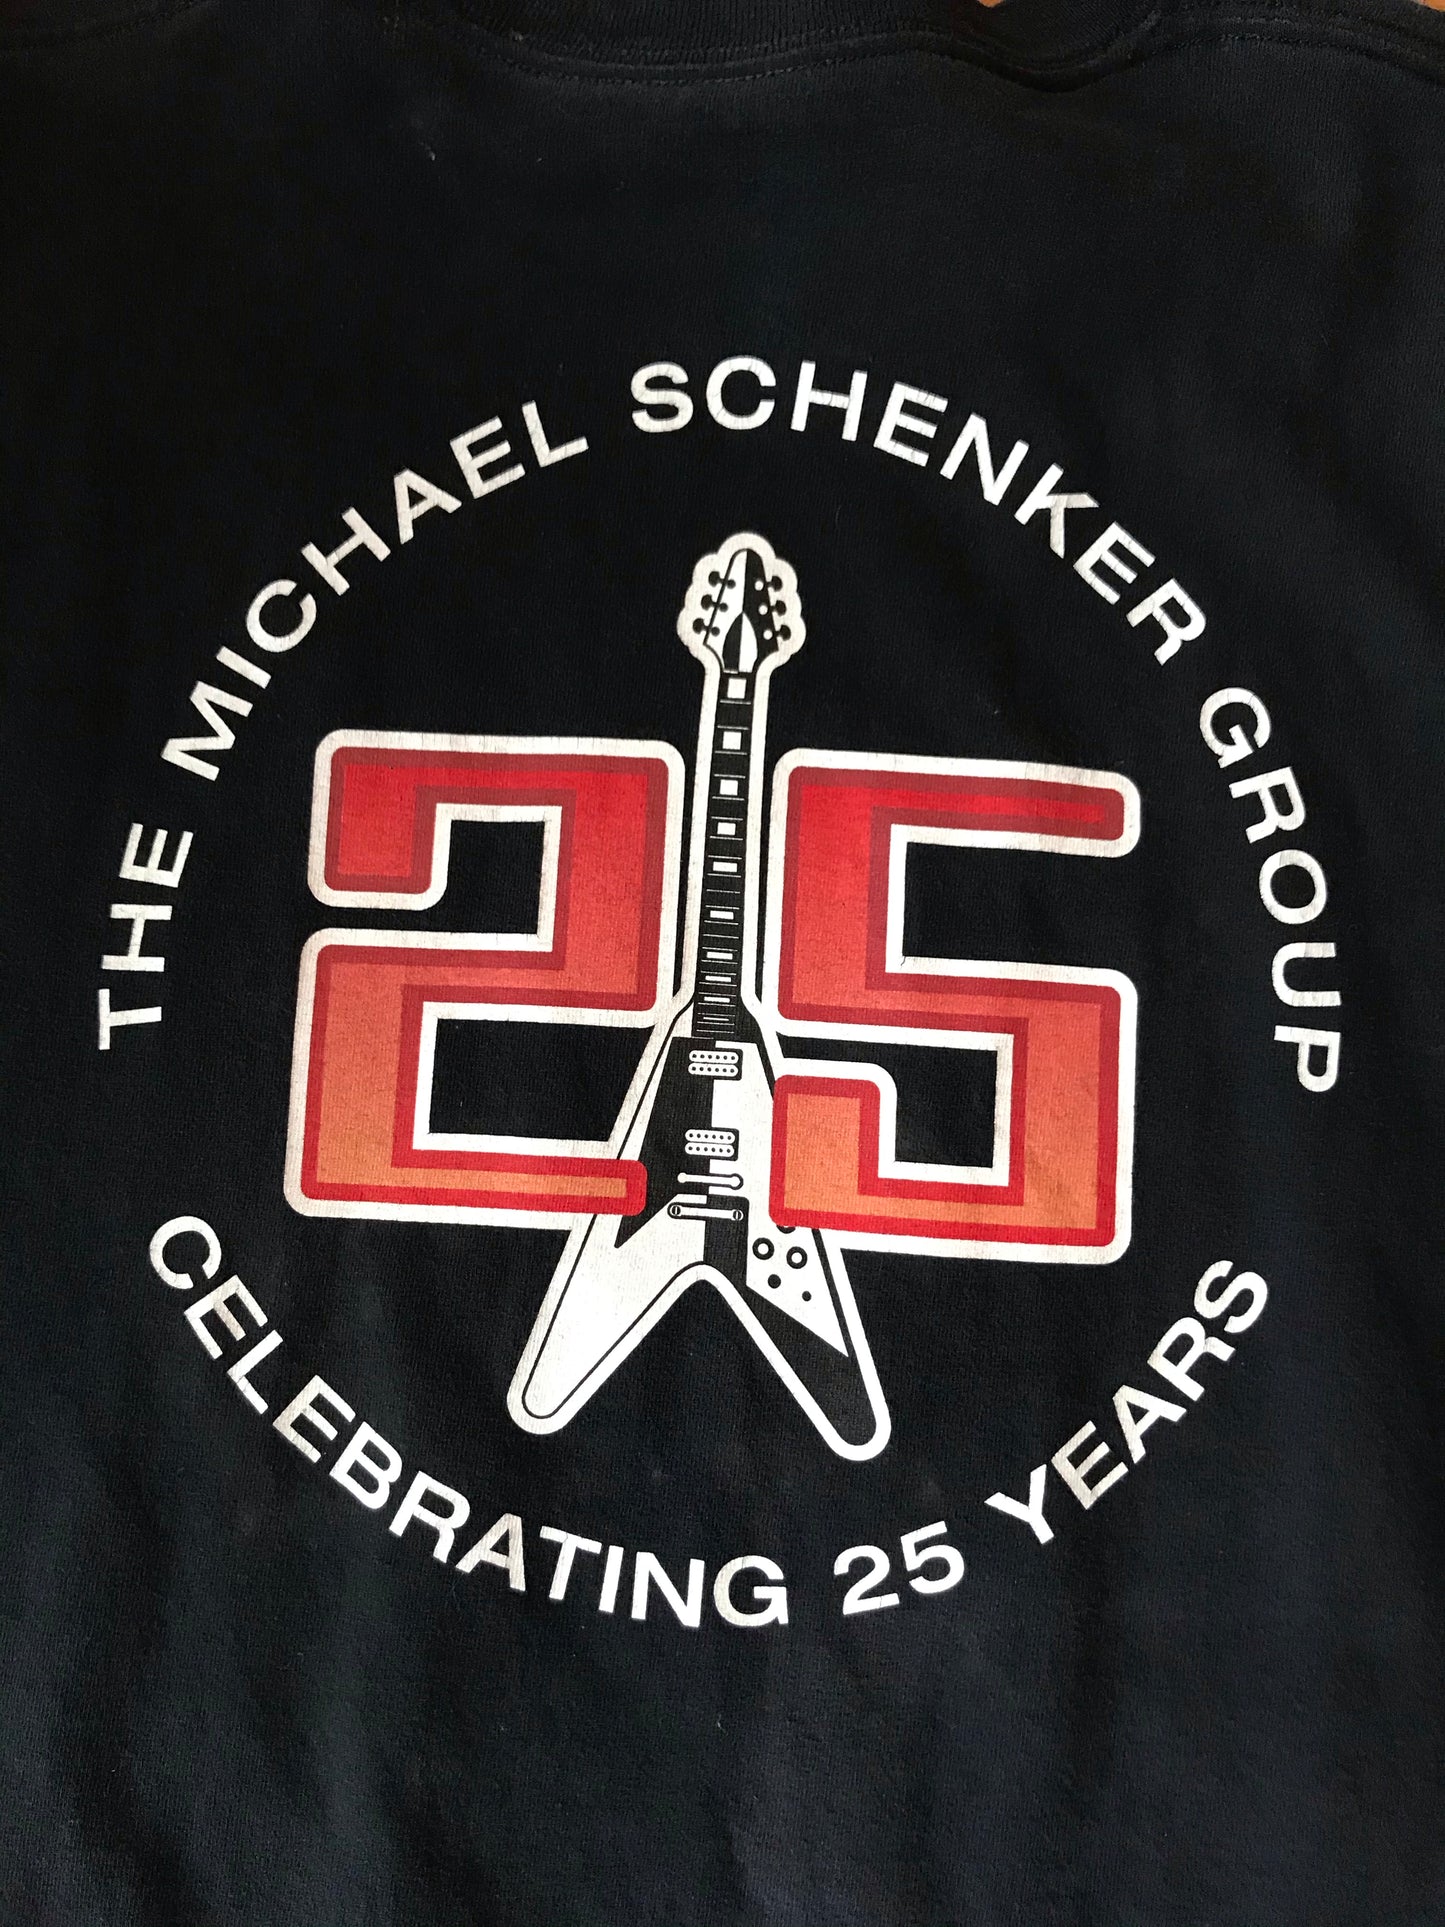 Michael Schenker Group (MSG) 25th Anniversary T-Shirt